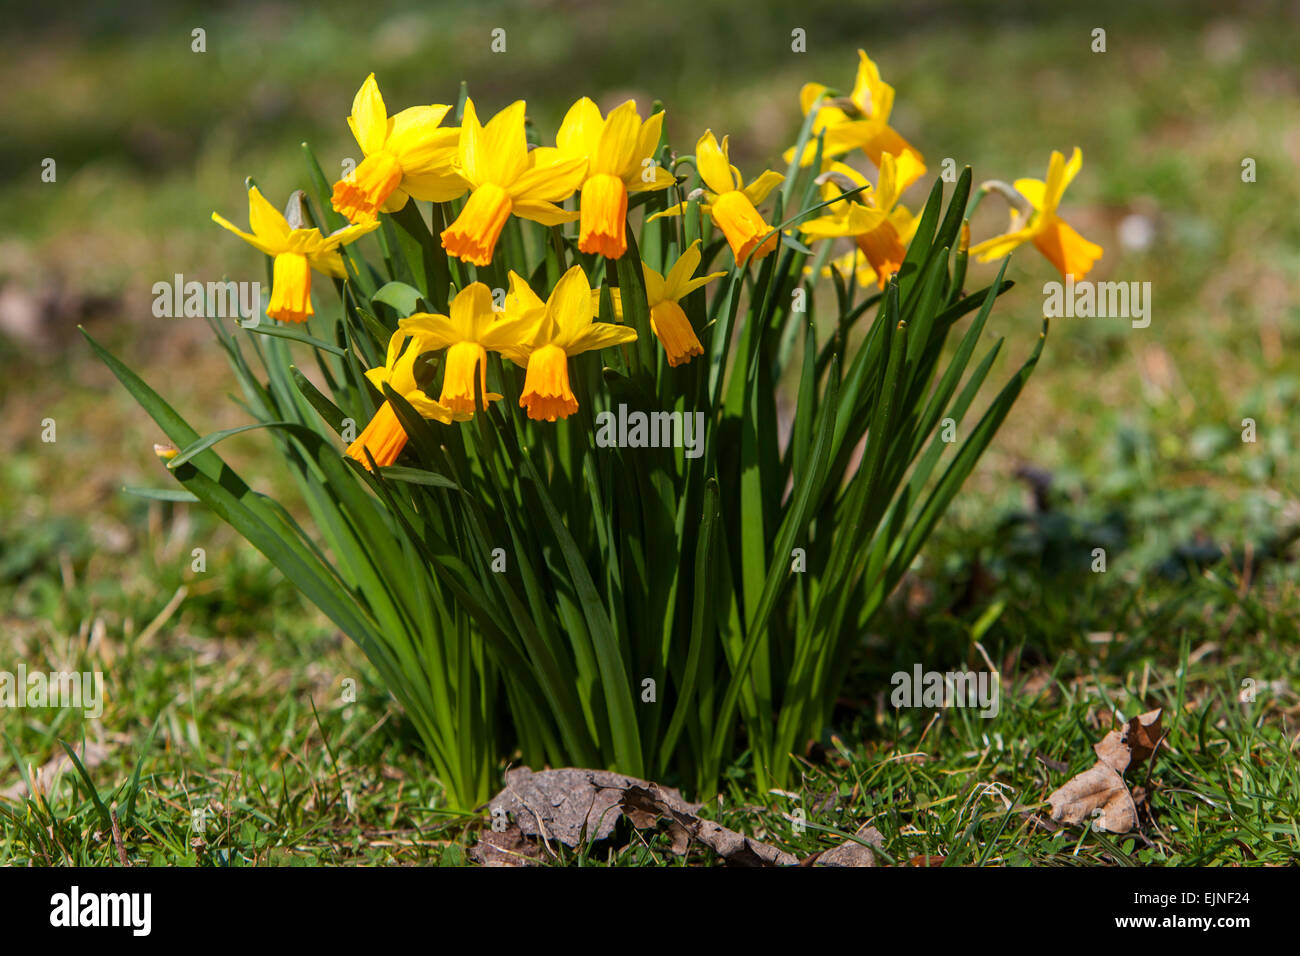 Gelbe Narzissen Gruppe in Wiese Garten Rasen Blumen Narzisse Stockfoto